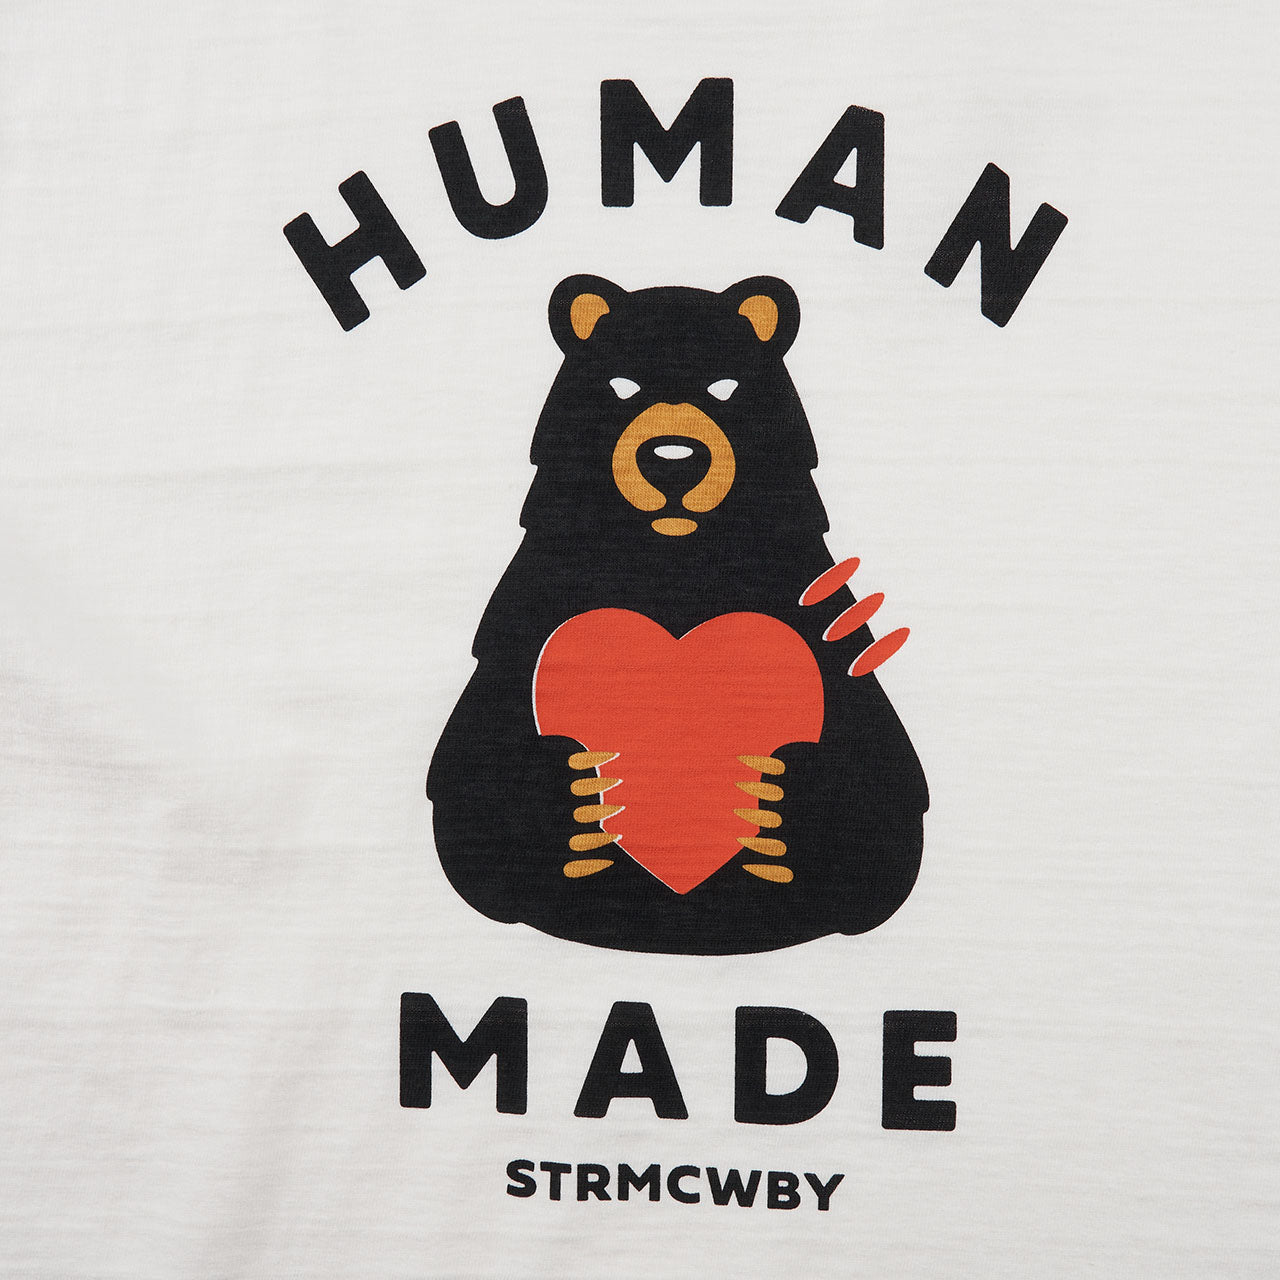 human made graphic t-shirt #13 (weiss)